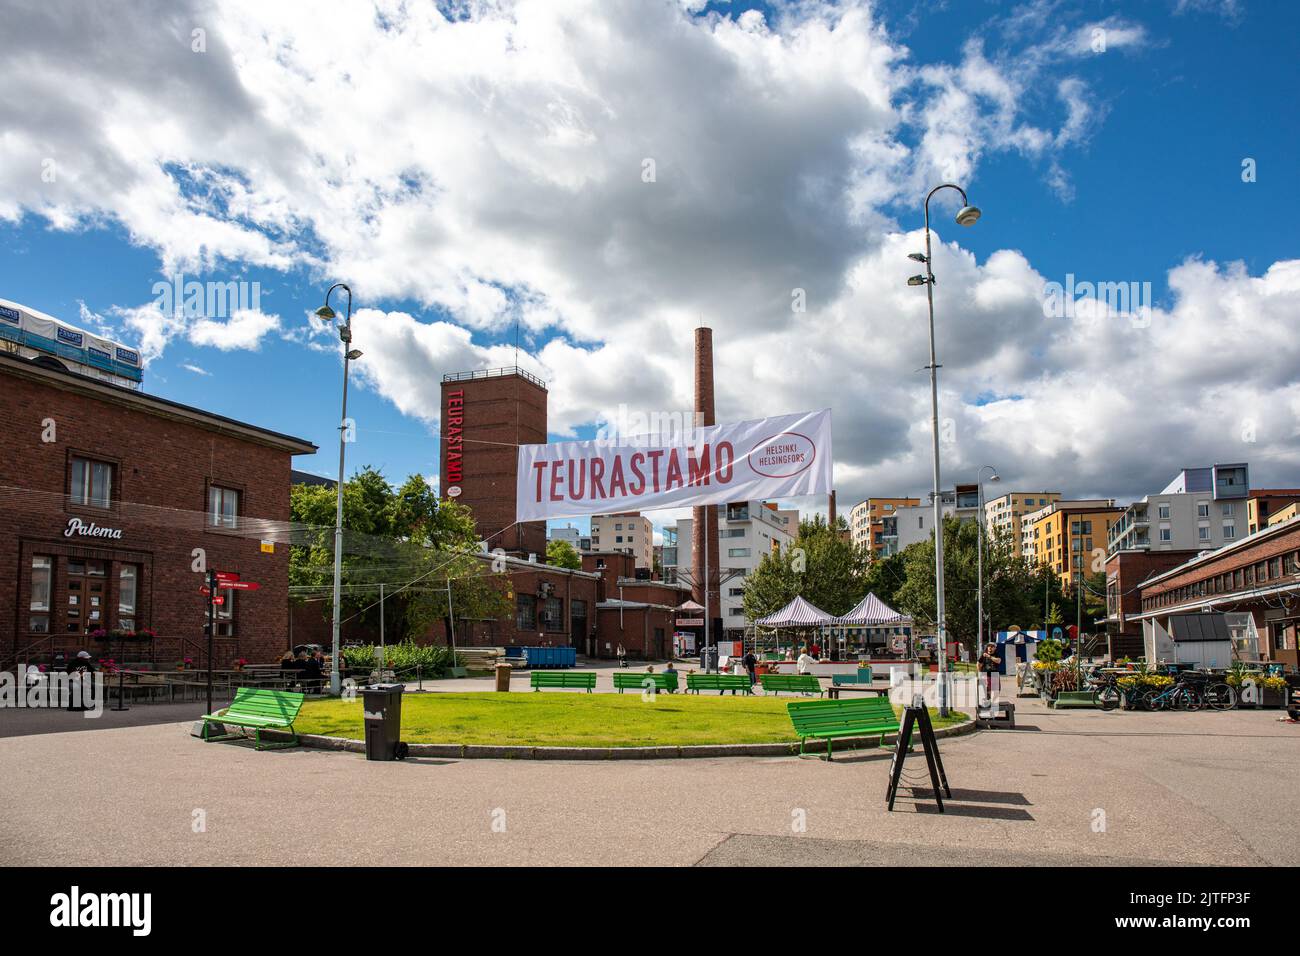 Teurastamo yard in Helsinki, Finland Stock Photo